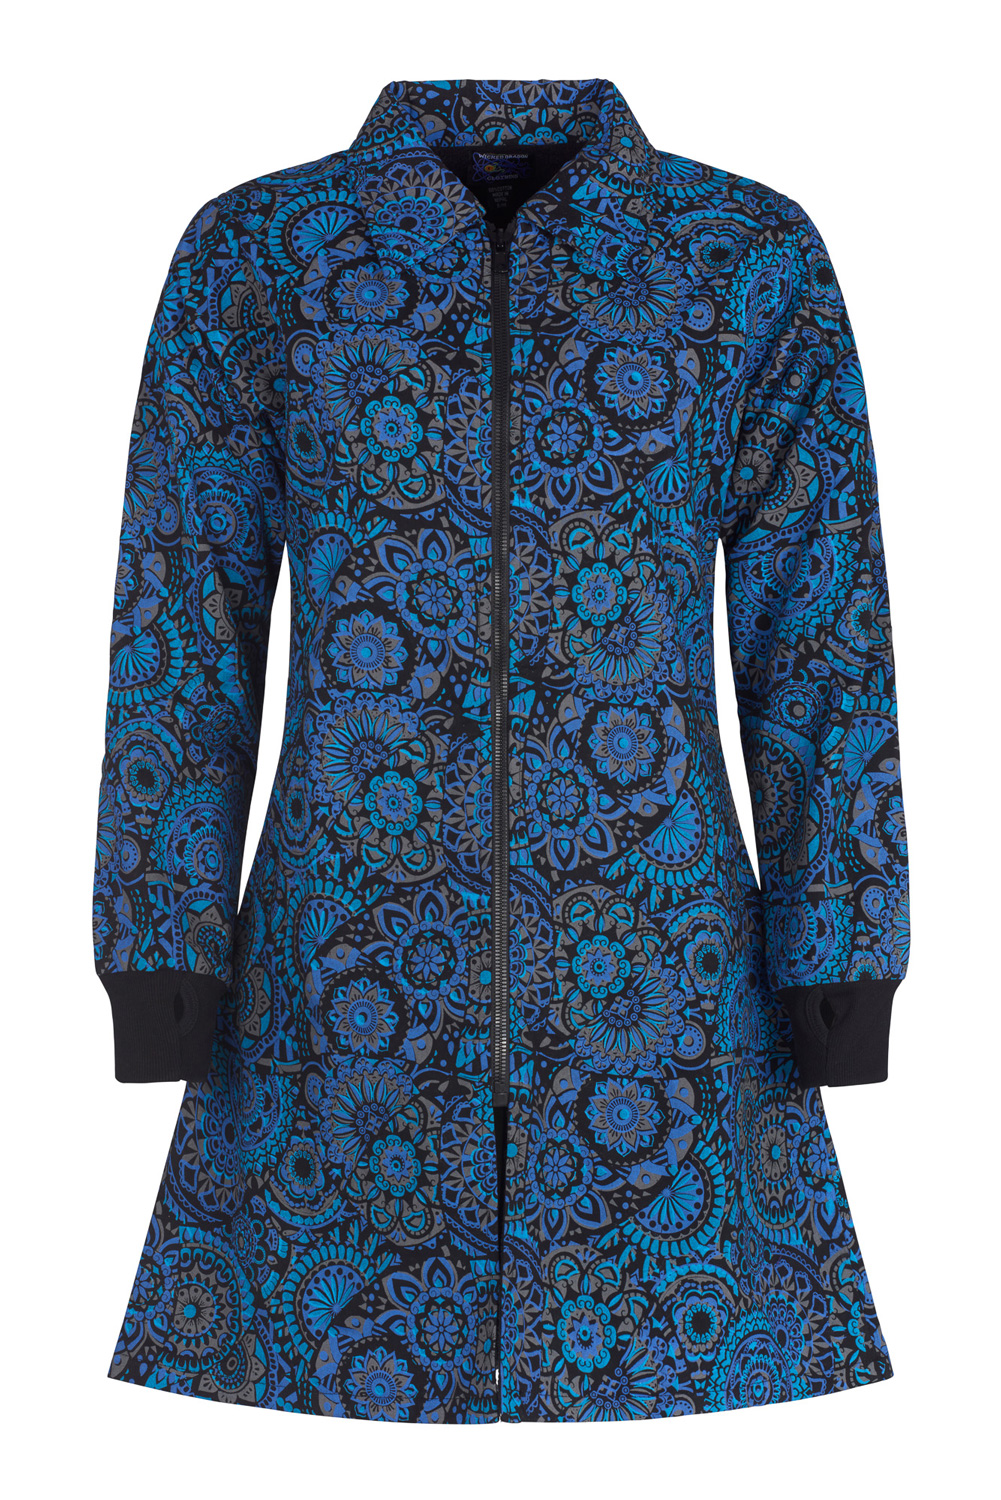 Lightweight fleece lined mandala print coat